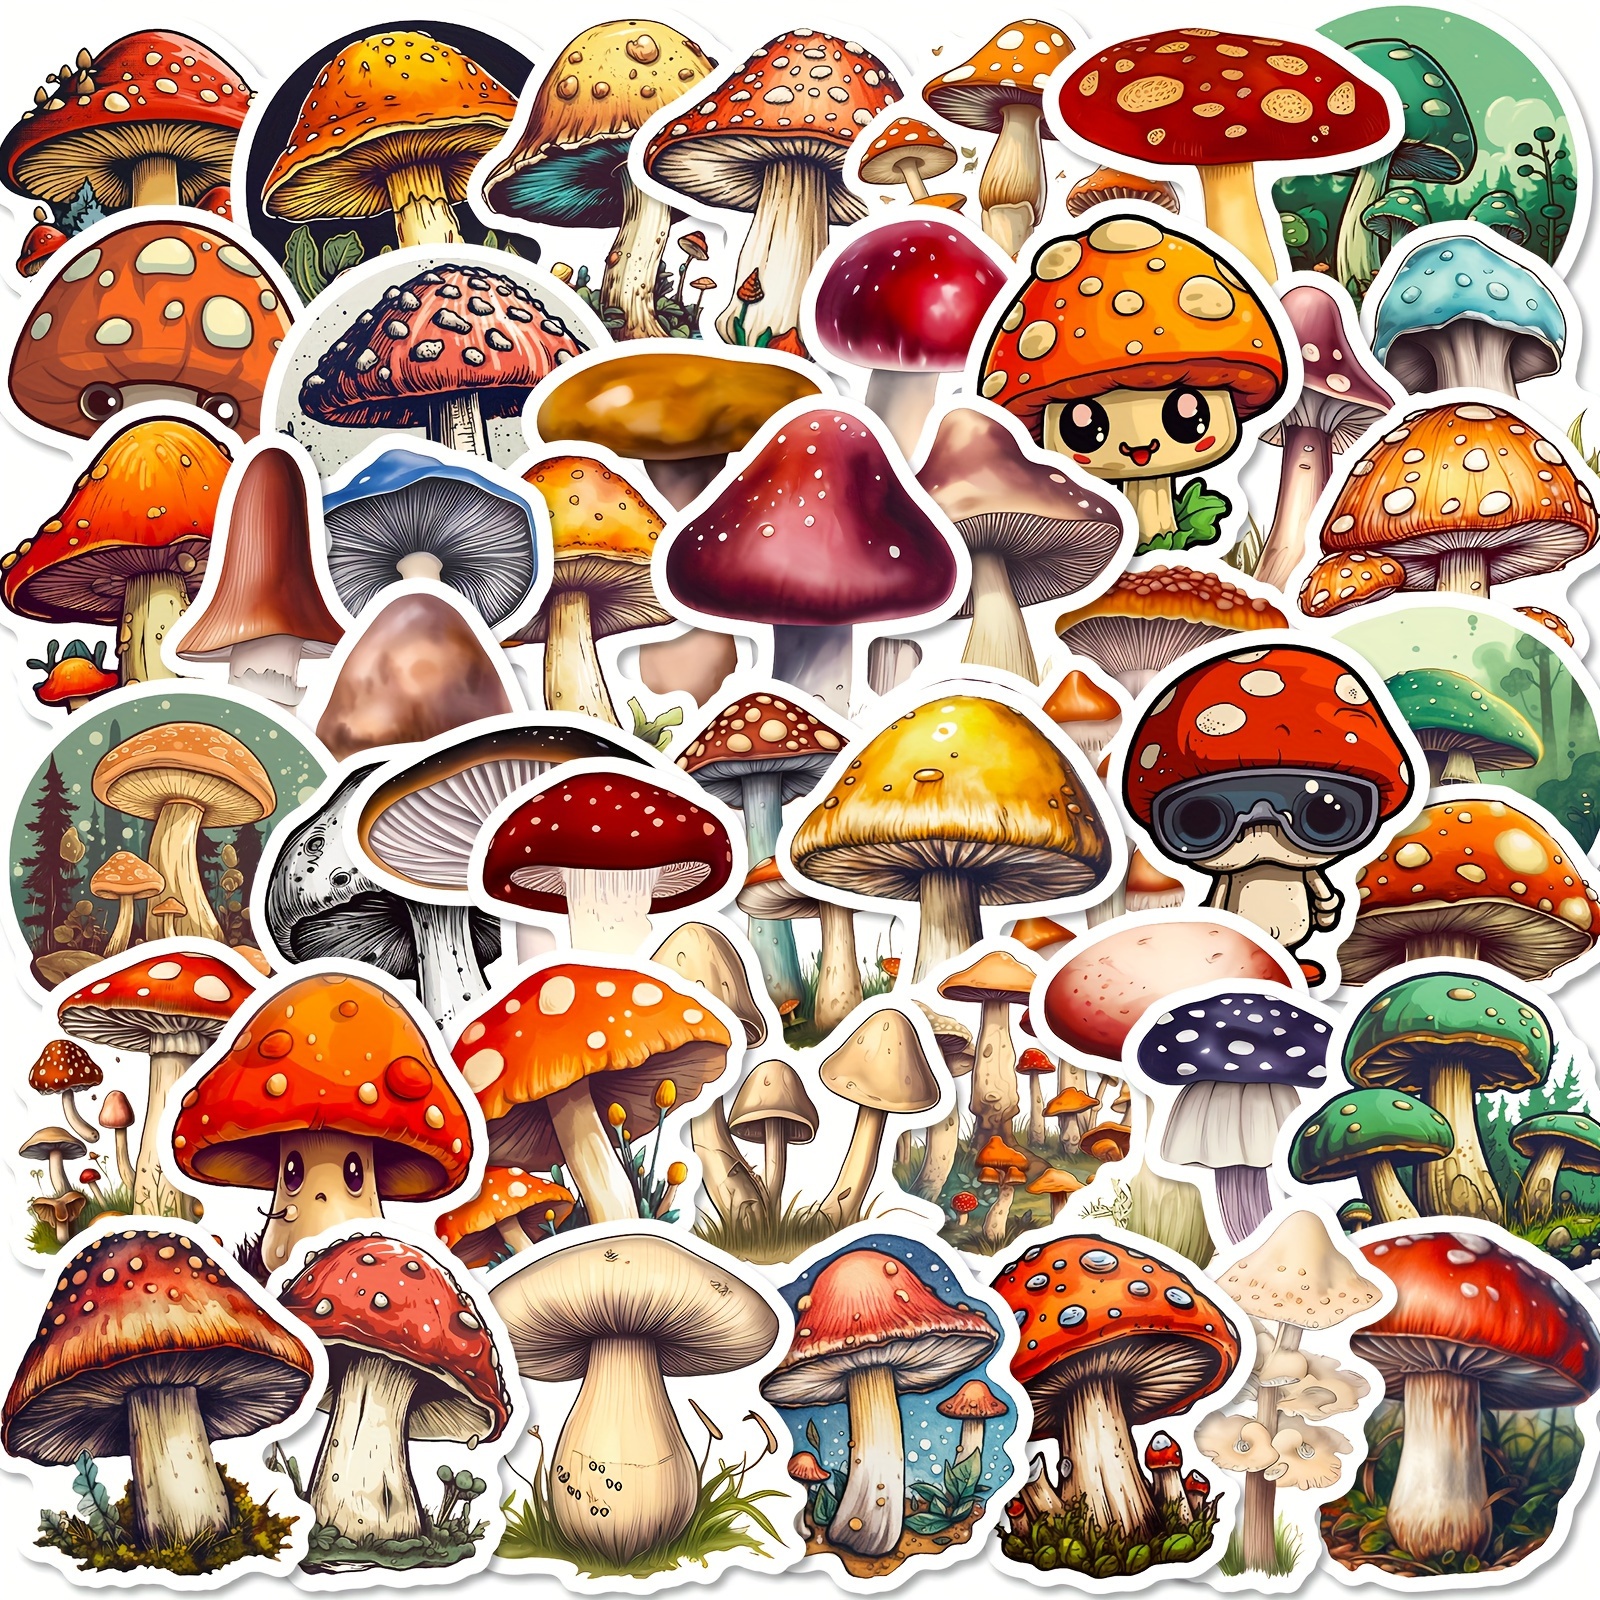 50Pcs/Set Kawaii Anime Mushroom Stickers Suitable For Laptops PC